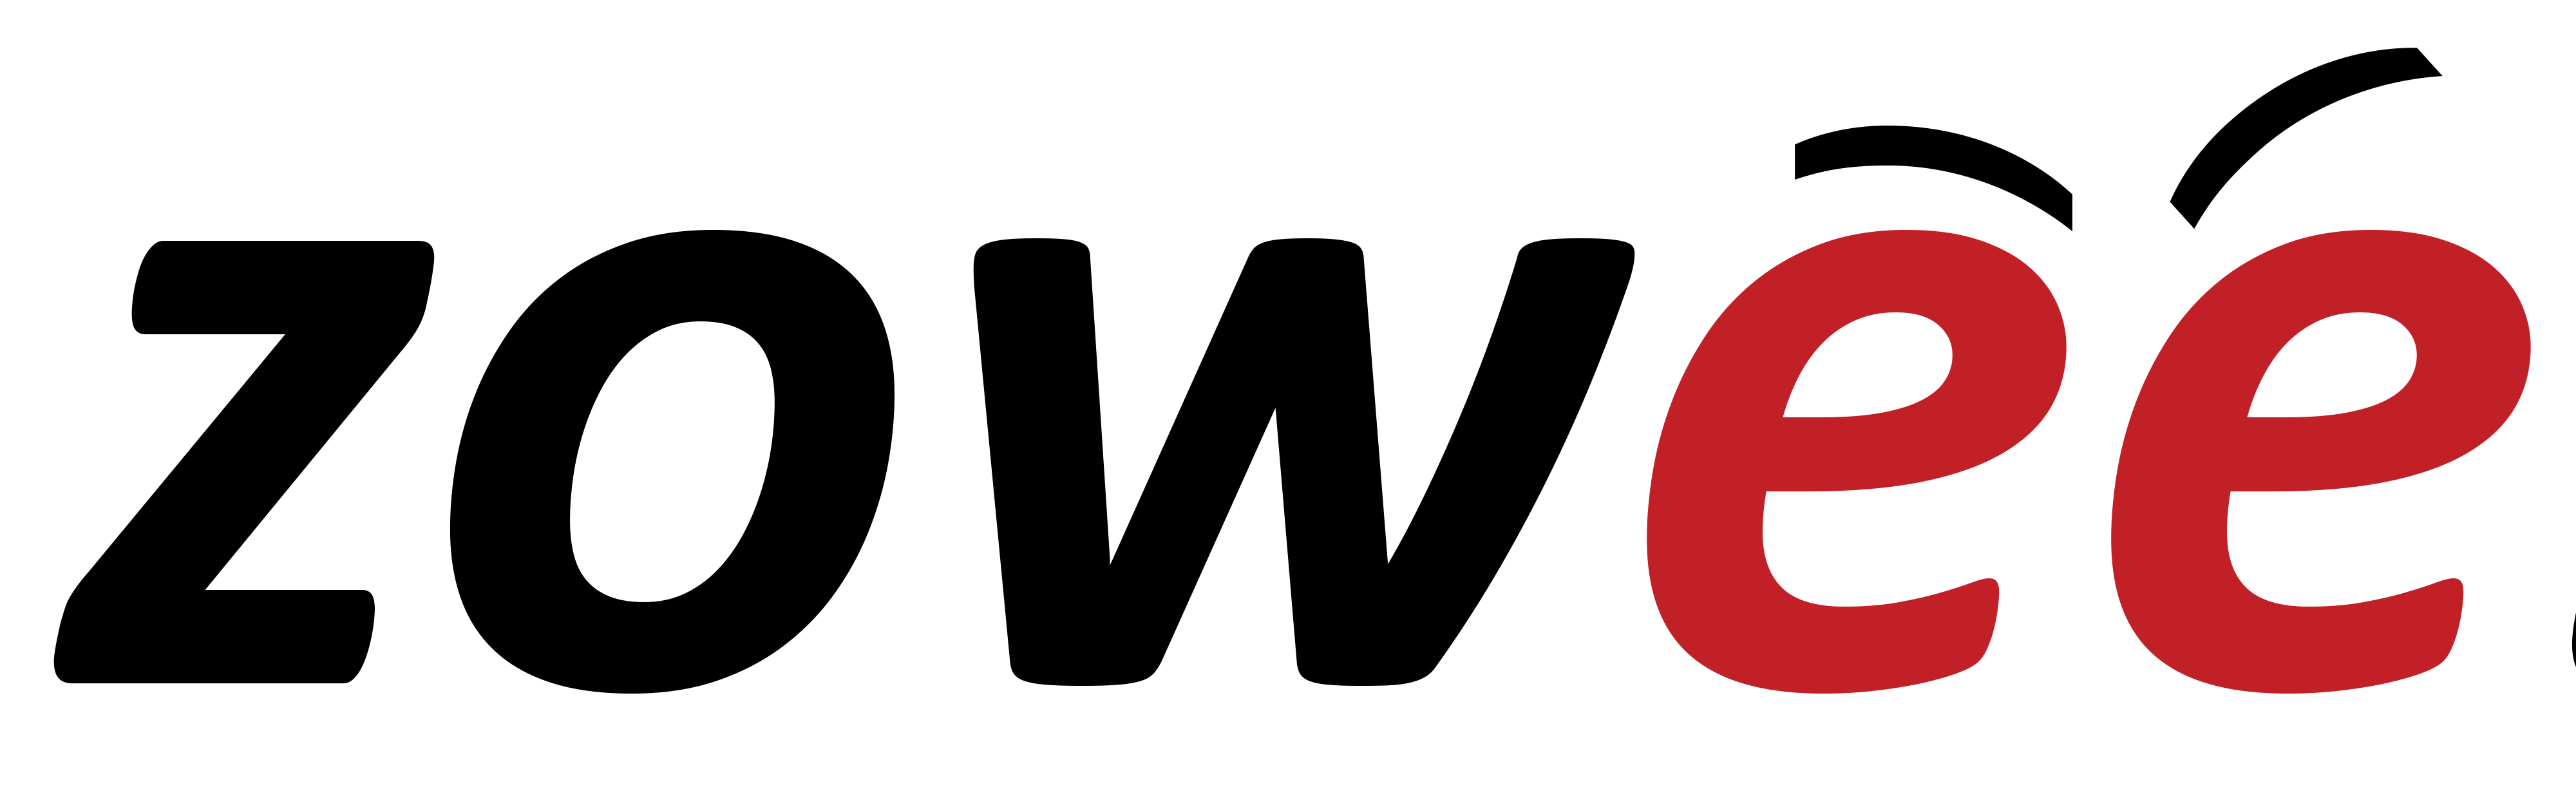 zowee logo 2